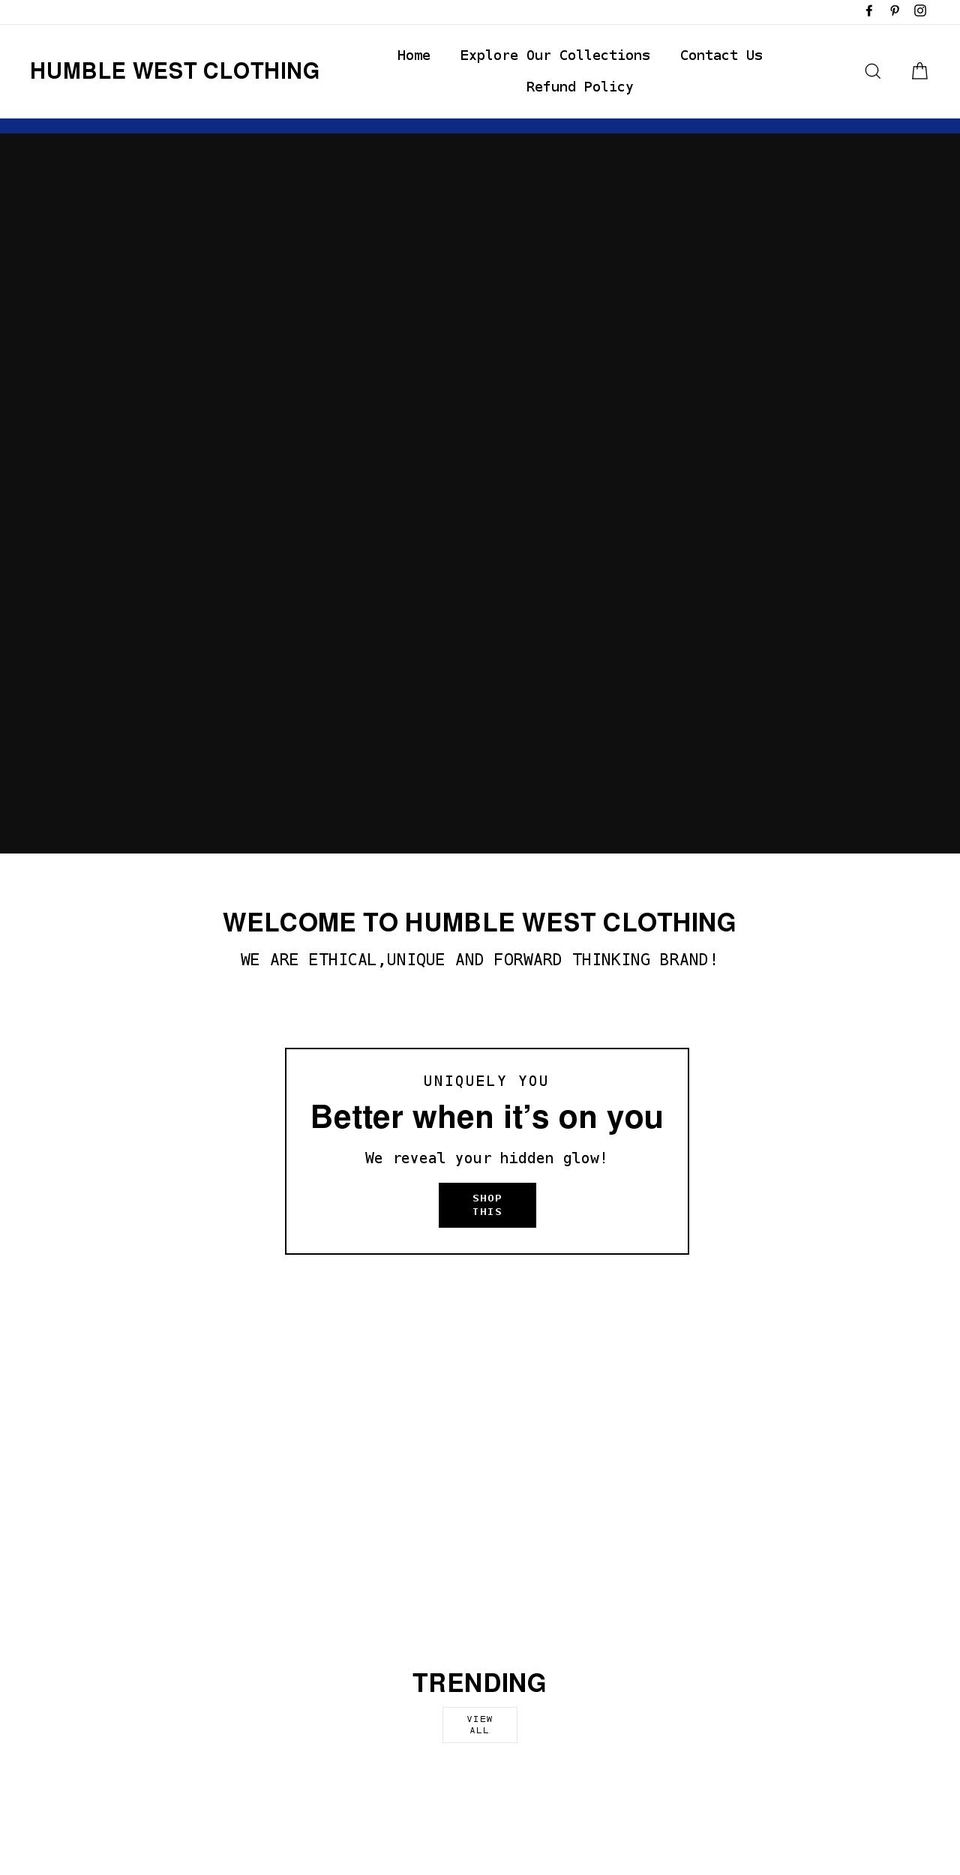 Impluse Shopify theme site example humblewestclothing.com